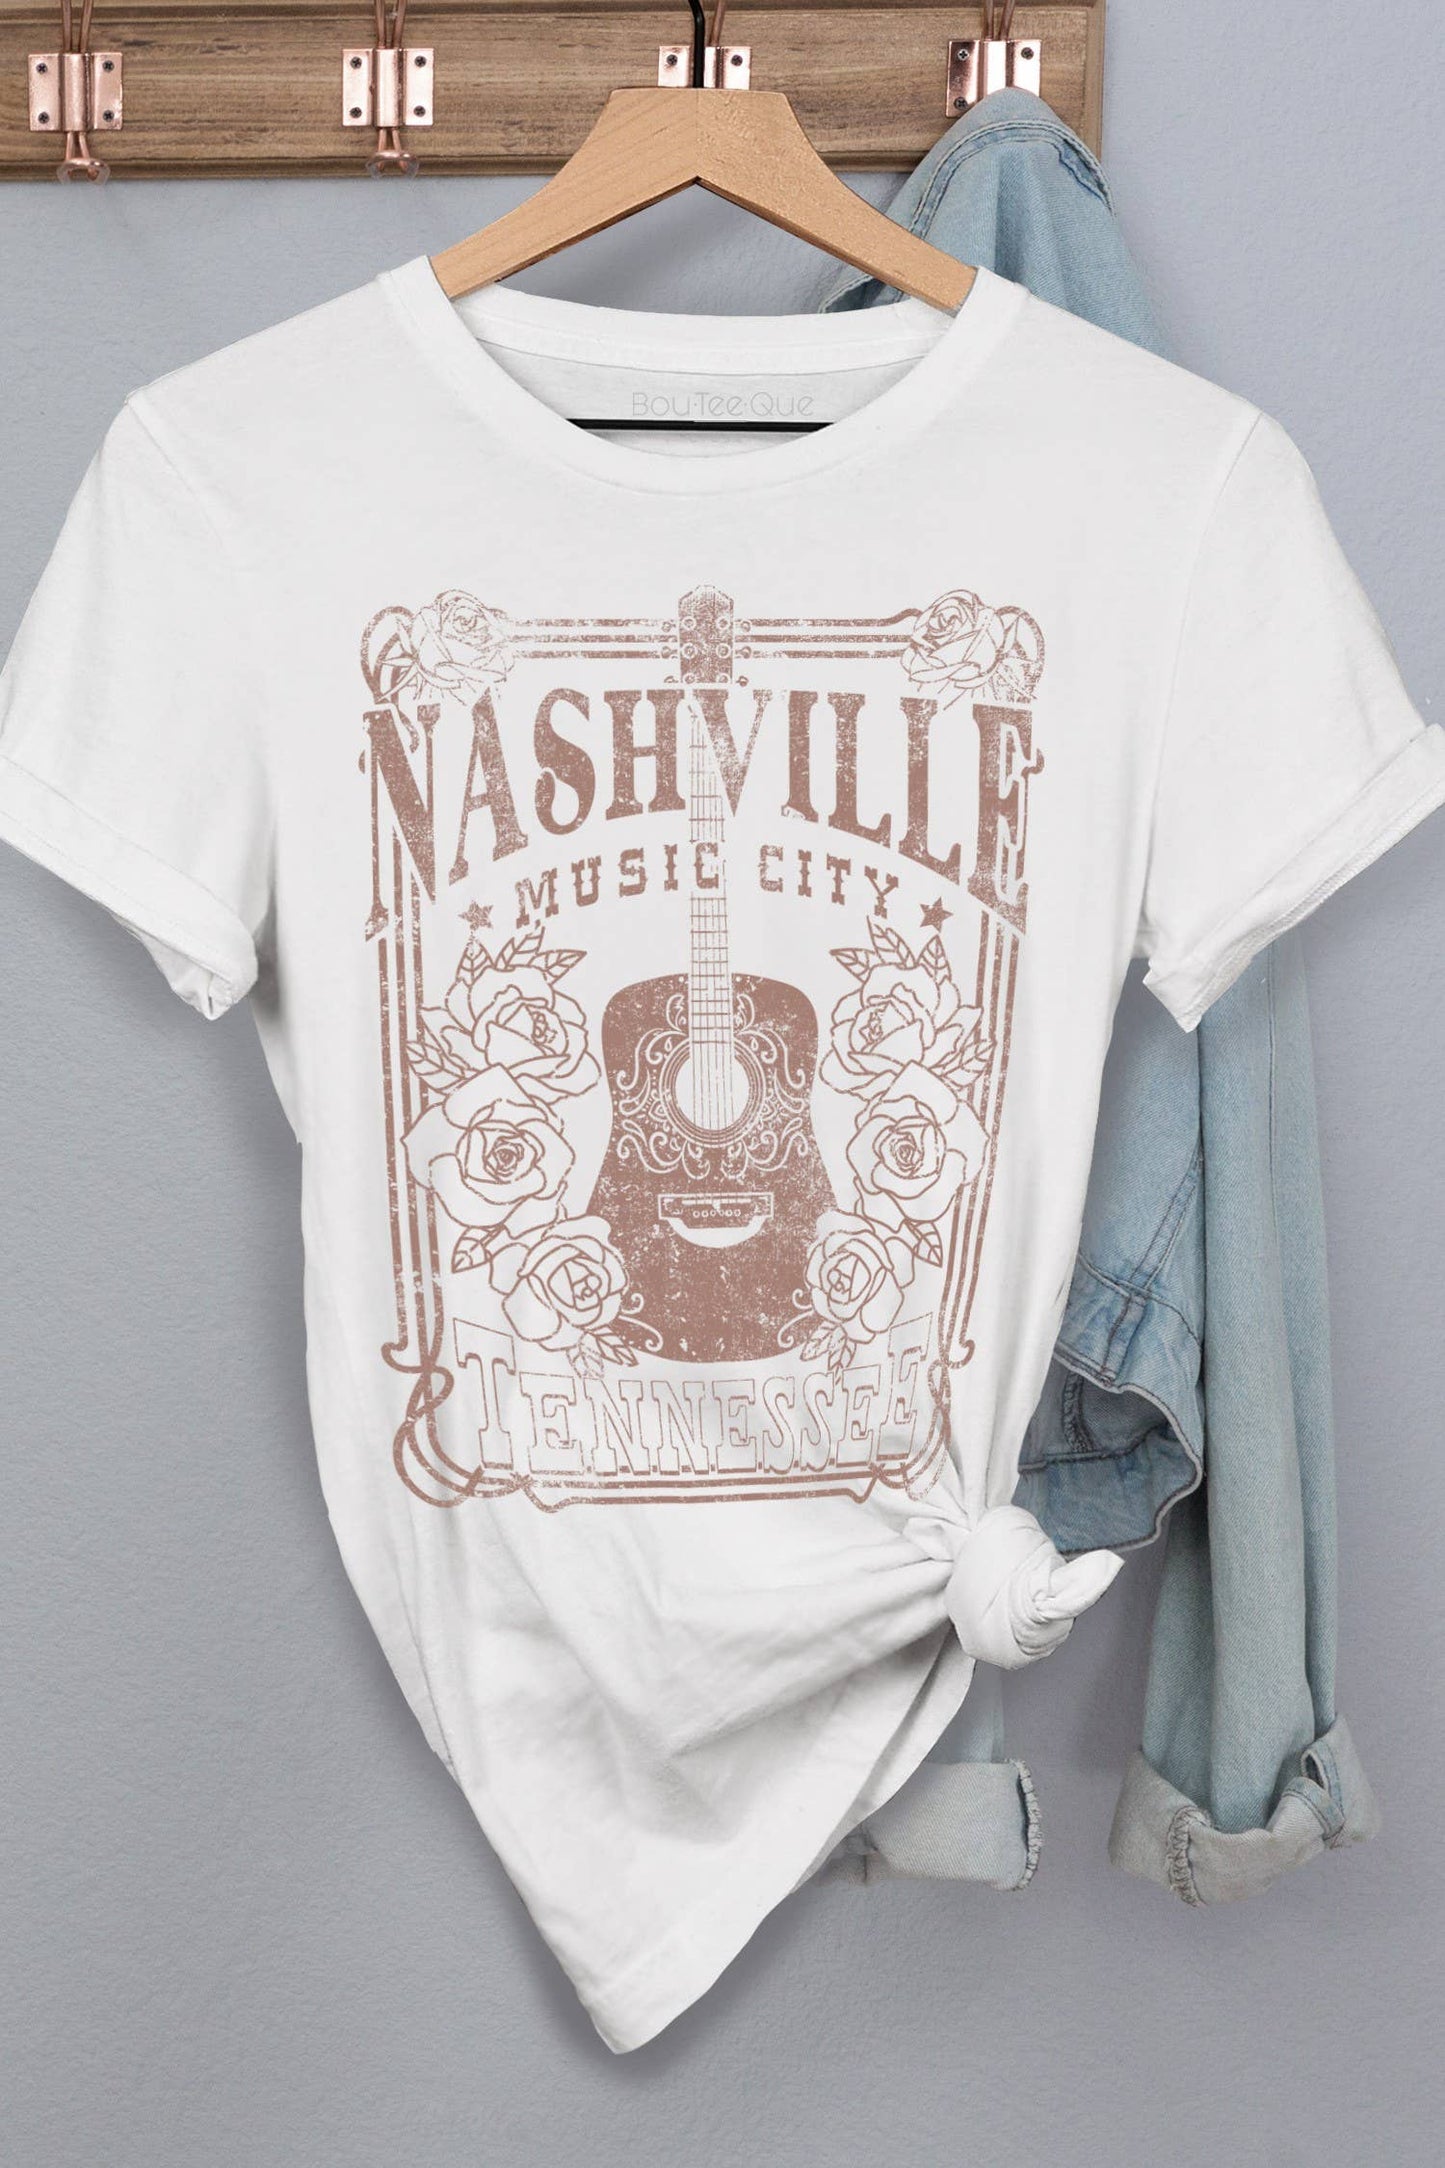 Graphic T - Nashville